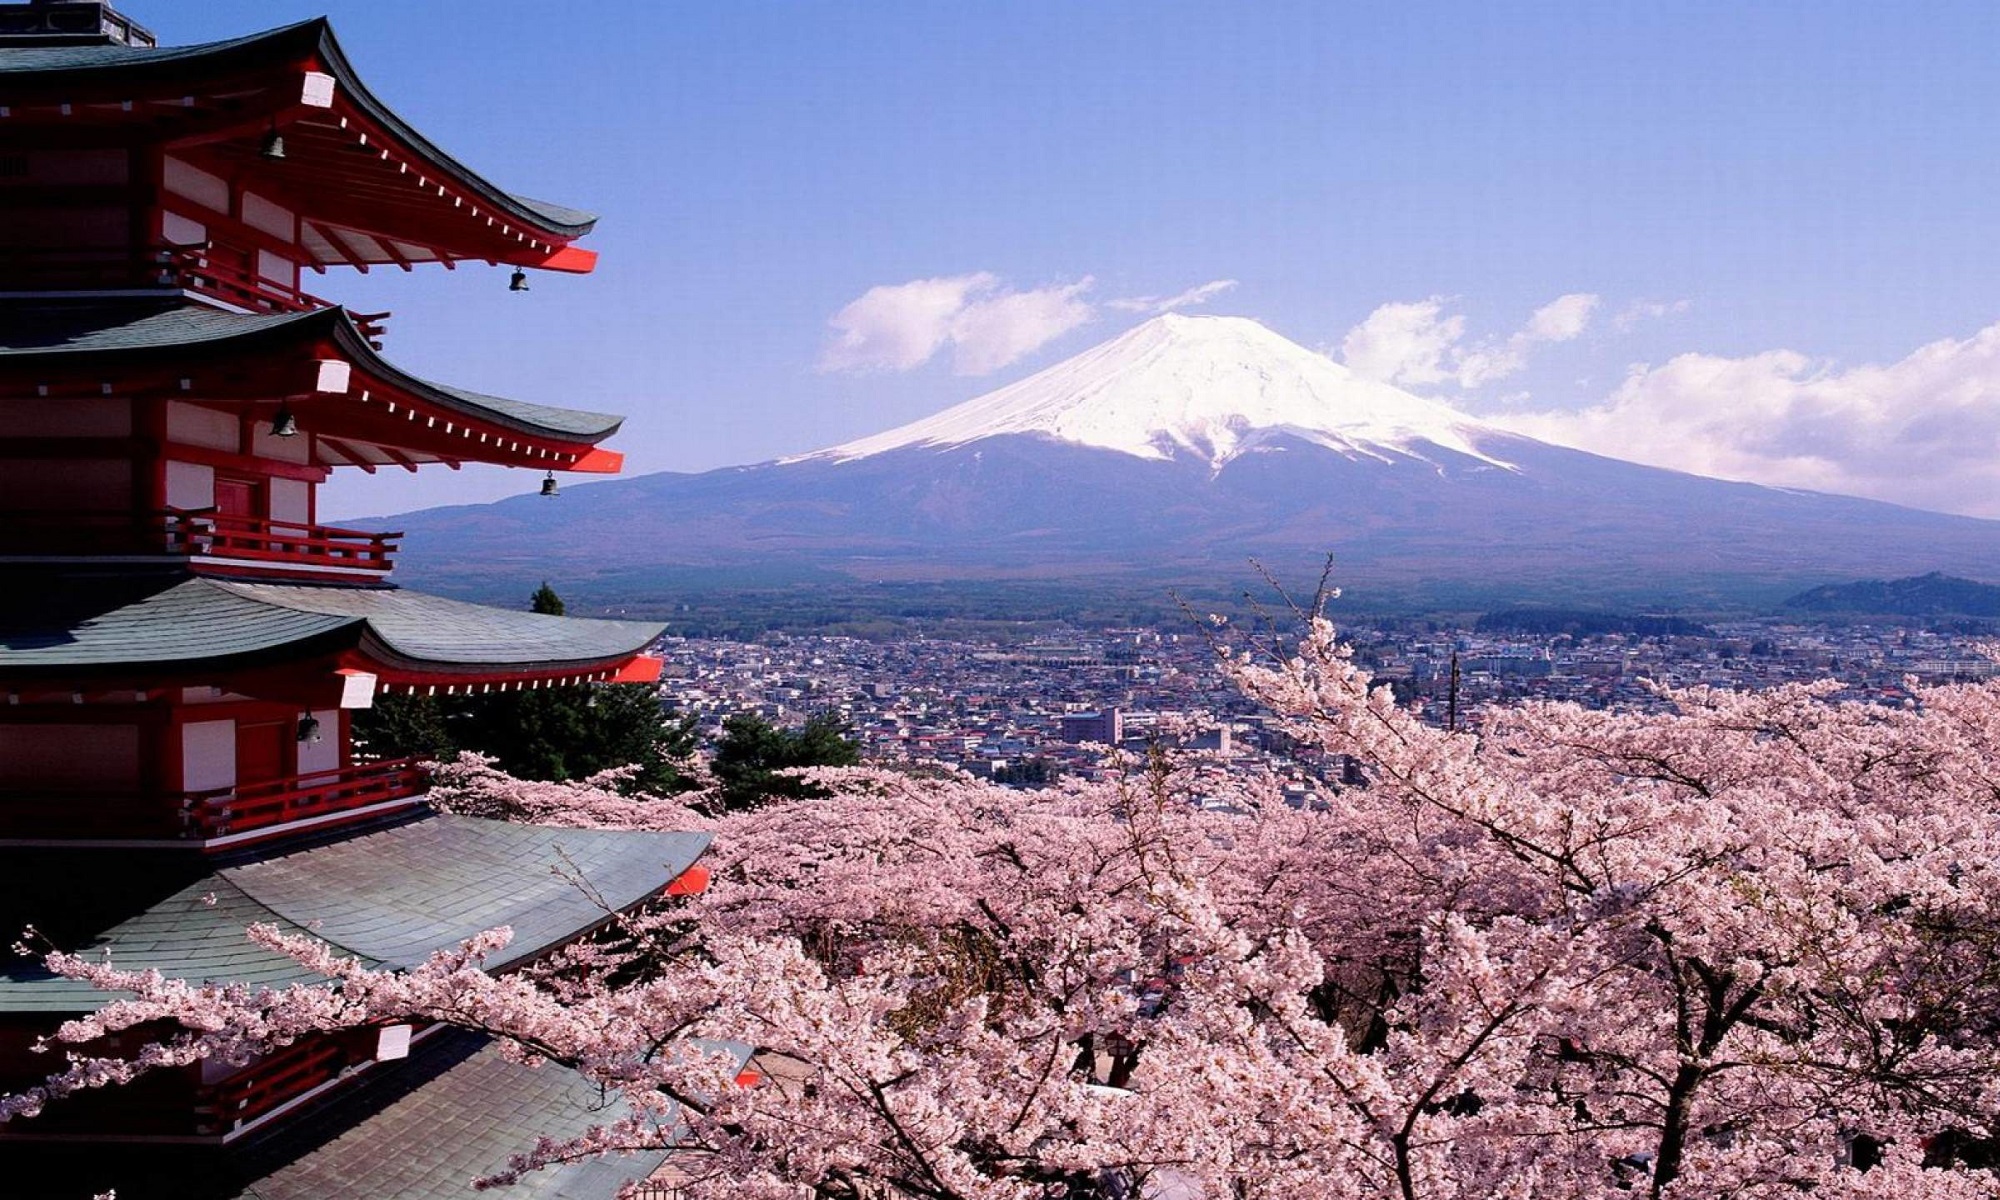 Reasons to visit Japan